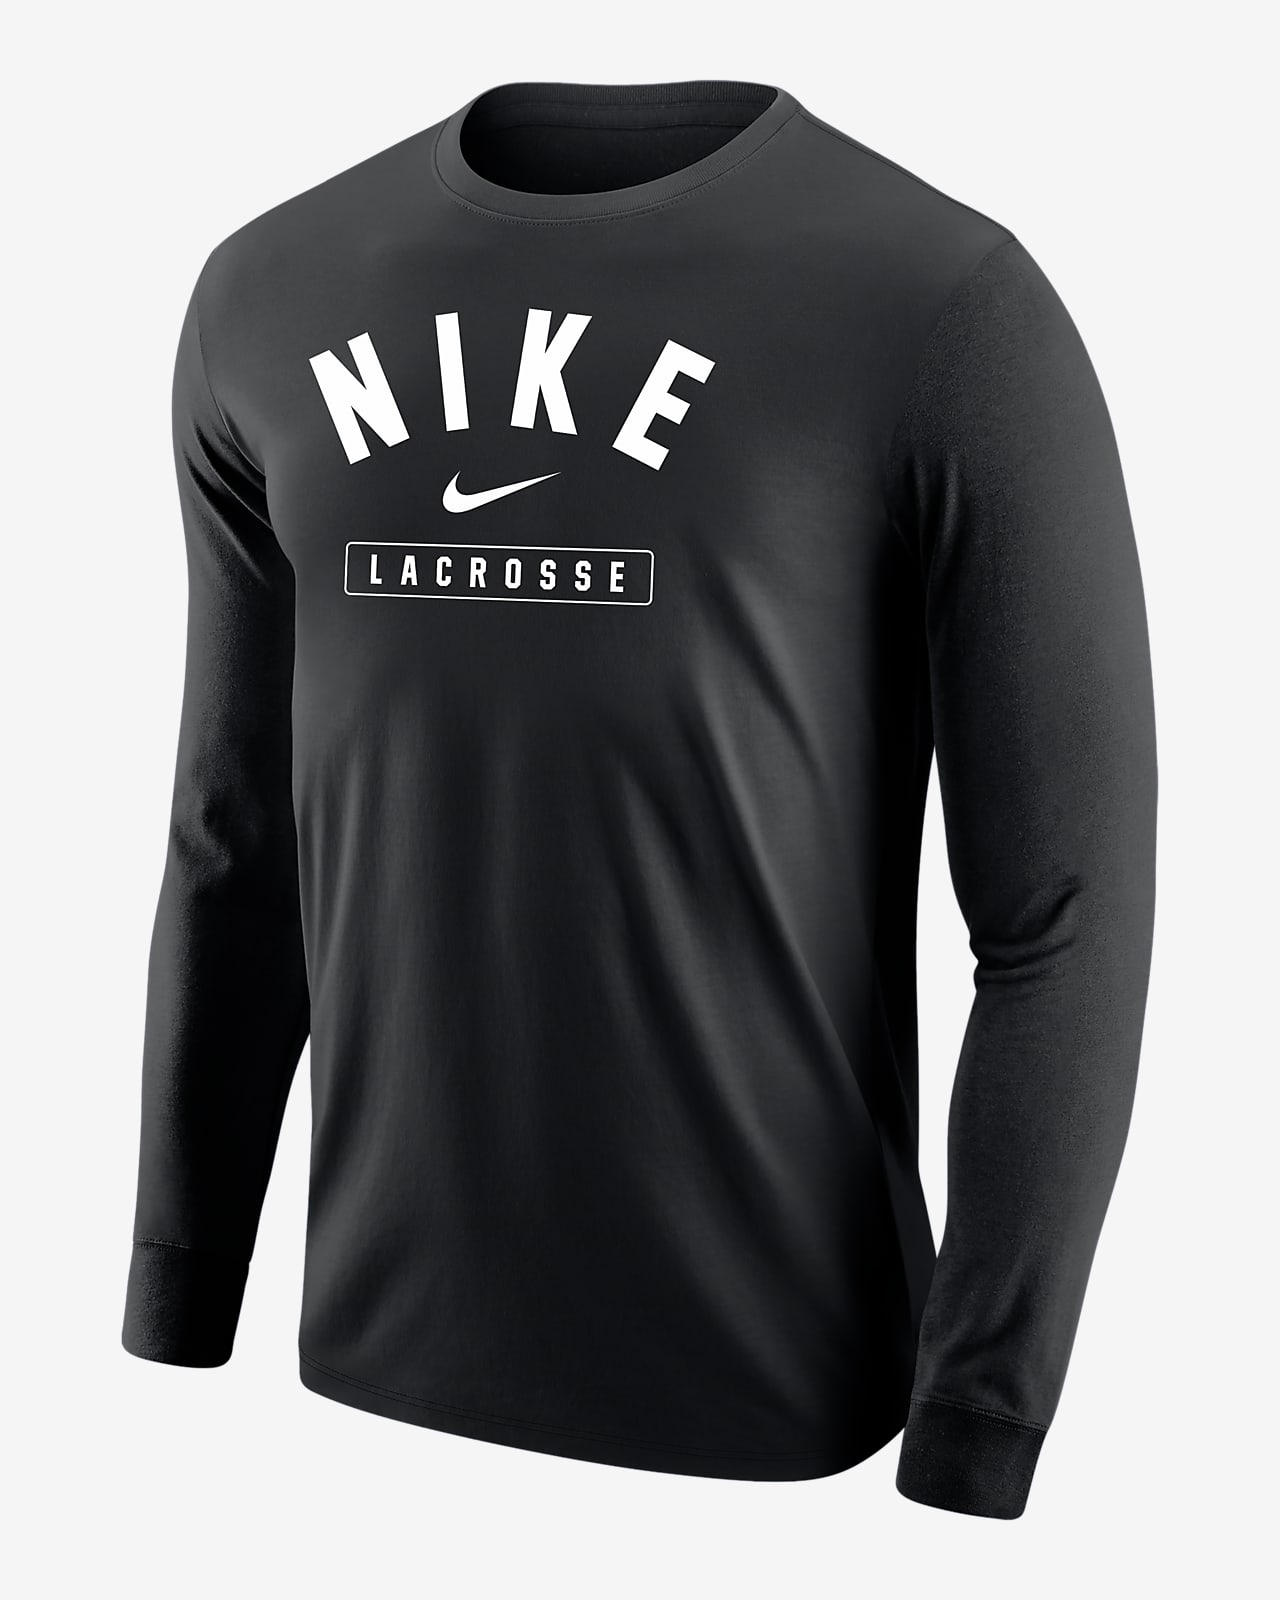 Nike Lacrosse Men's Long-Sleeve T-Shirt